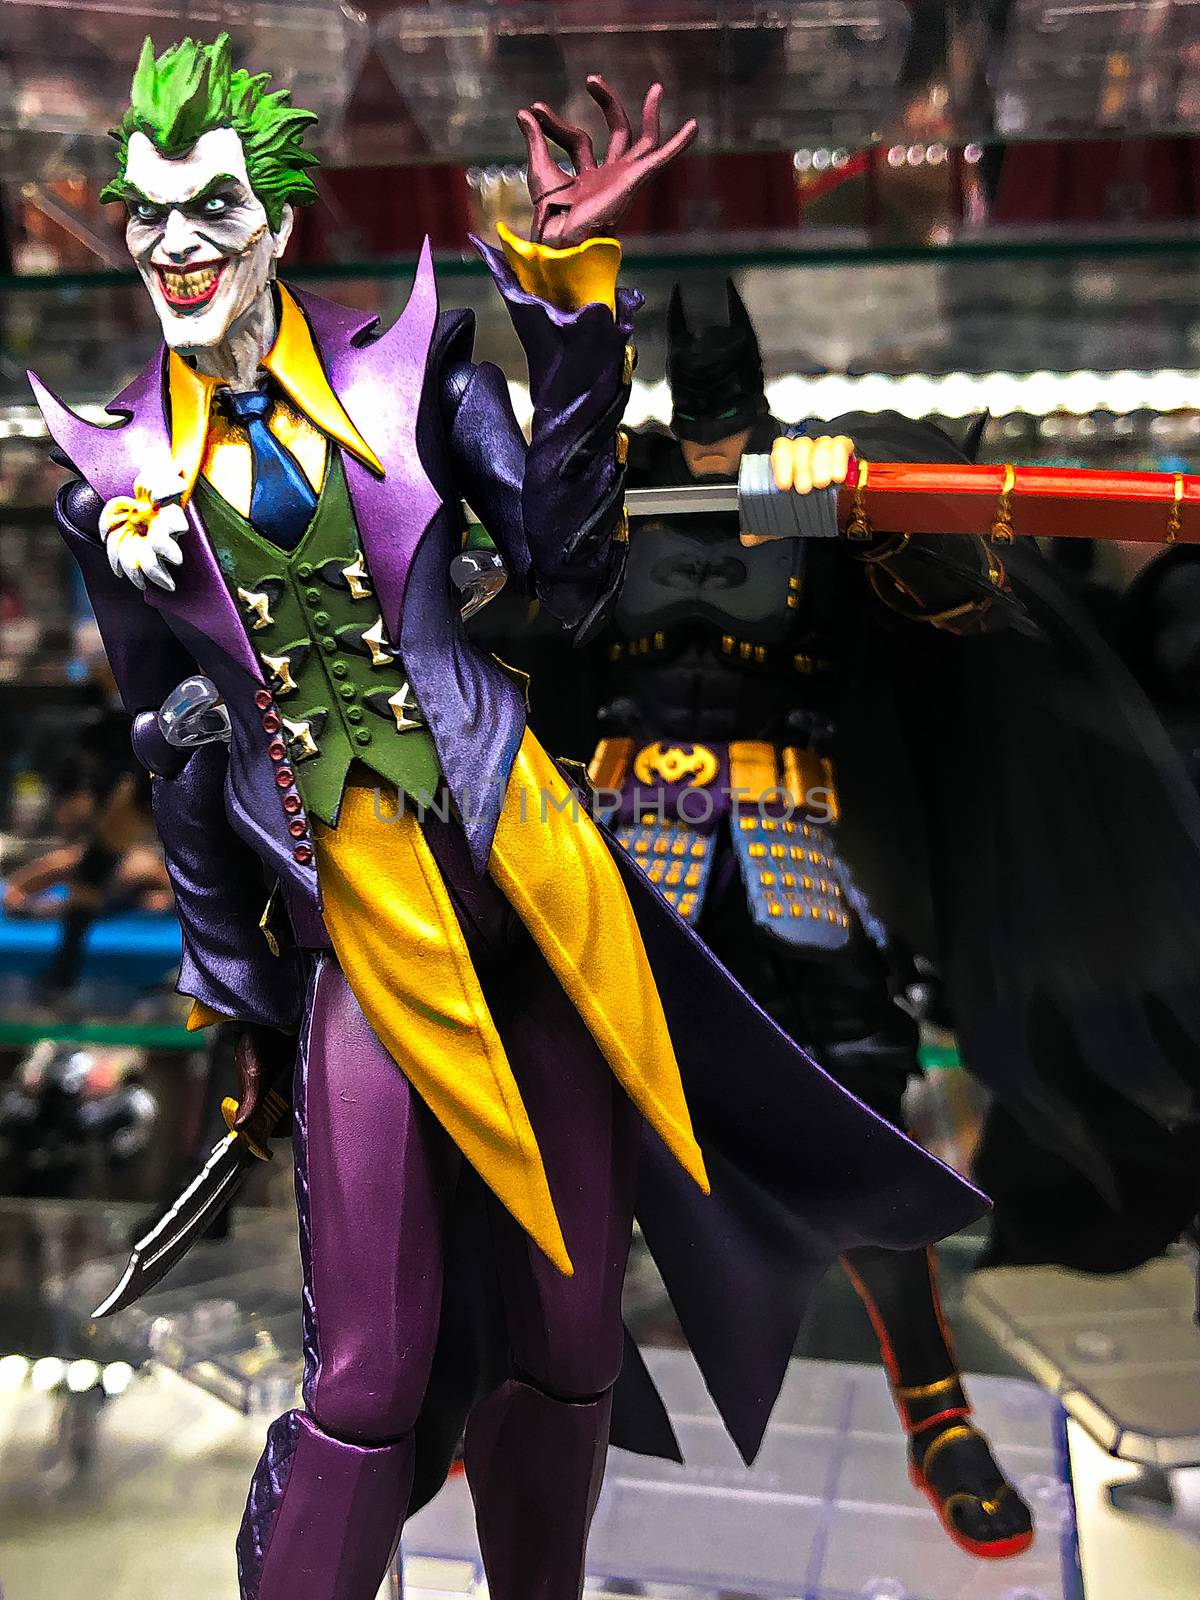 Osaka, Japan - Apr 23, 2019: Focused on fictional character figure from Arkham Asylum Joker figure out of toys shop.